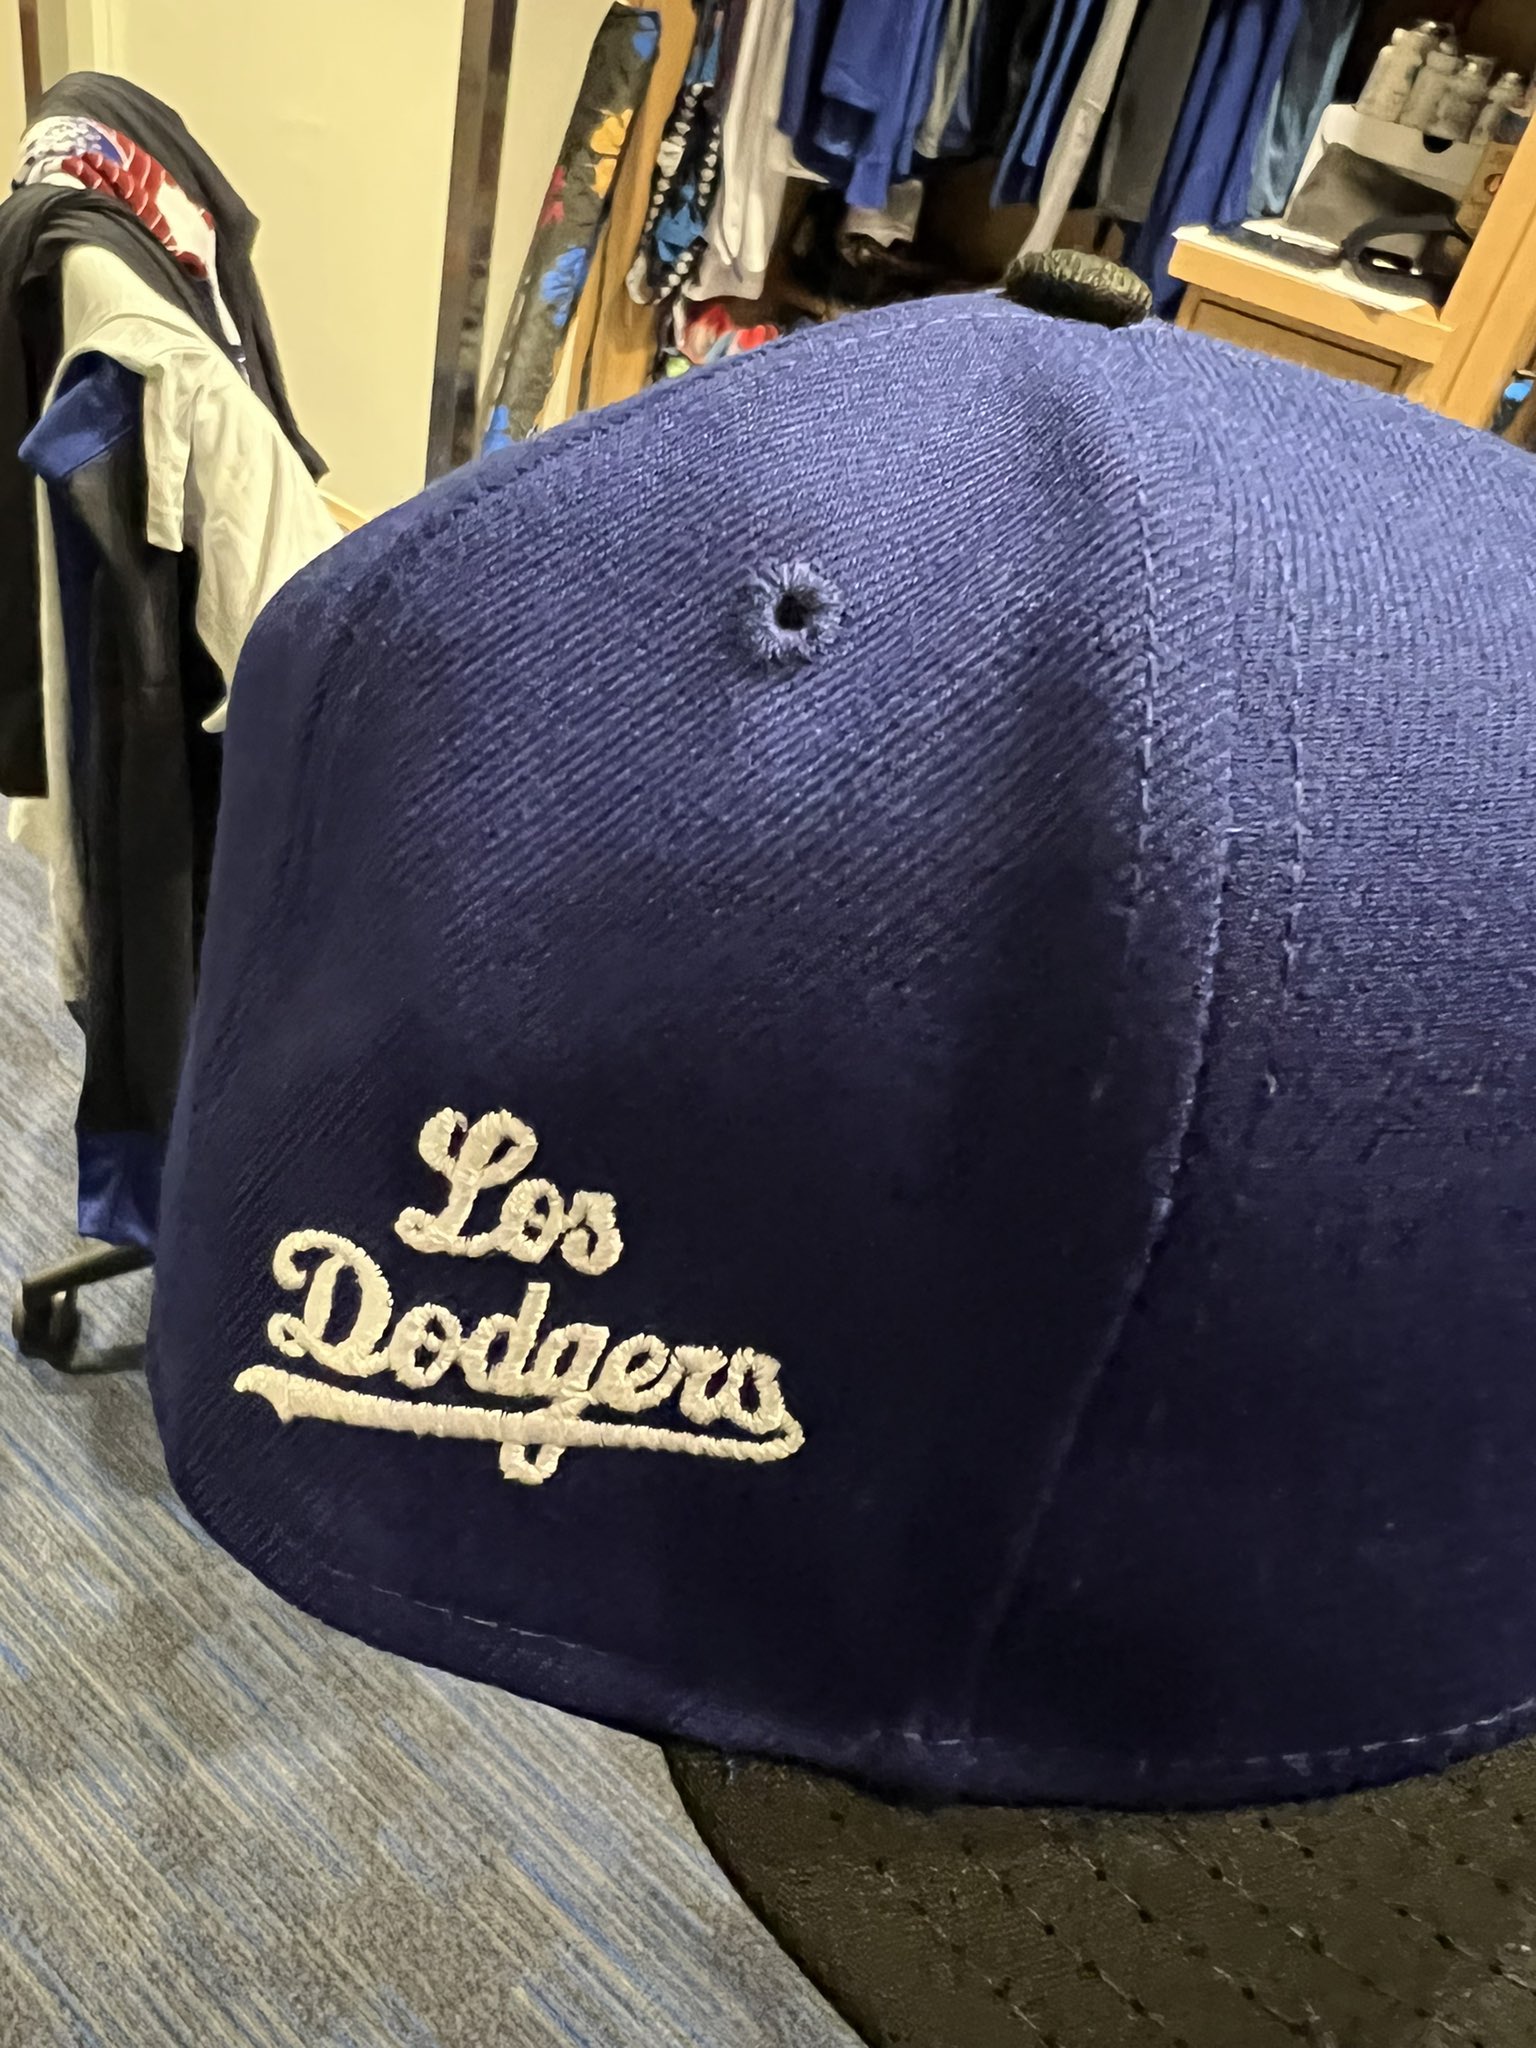 Los Angeles Dodgers: Team to wear City Connect uniforms vs. Mets